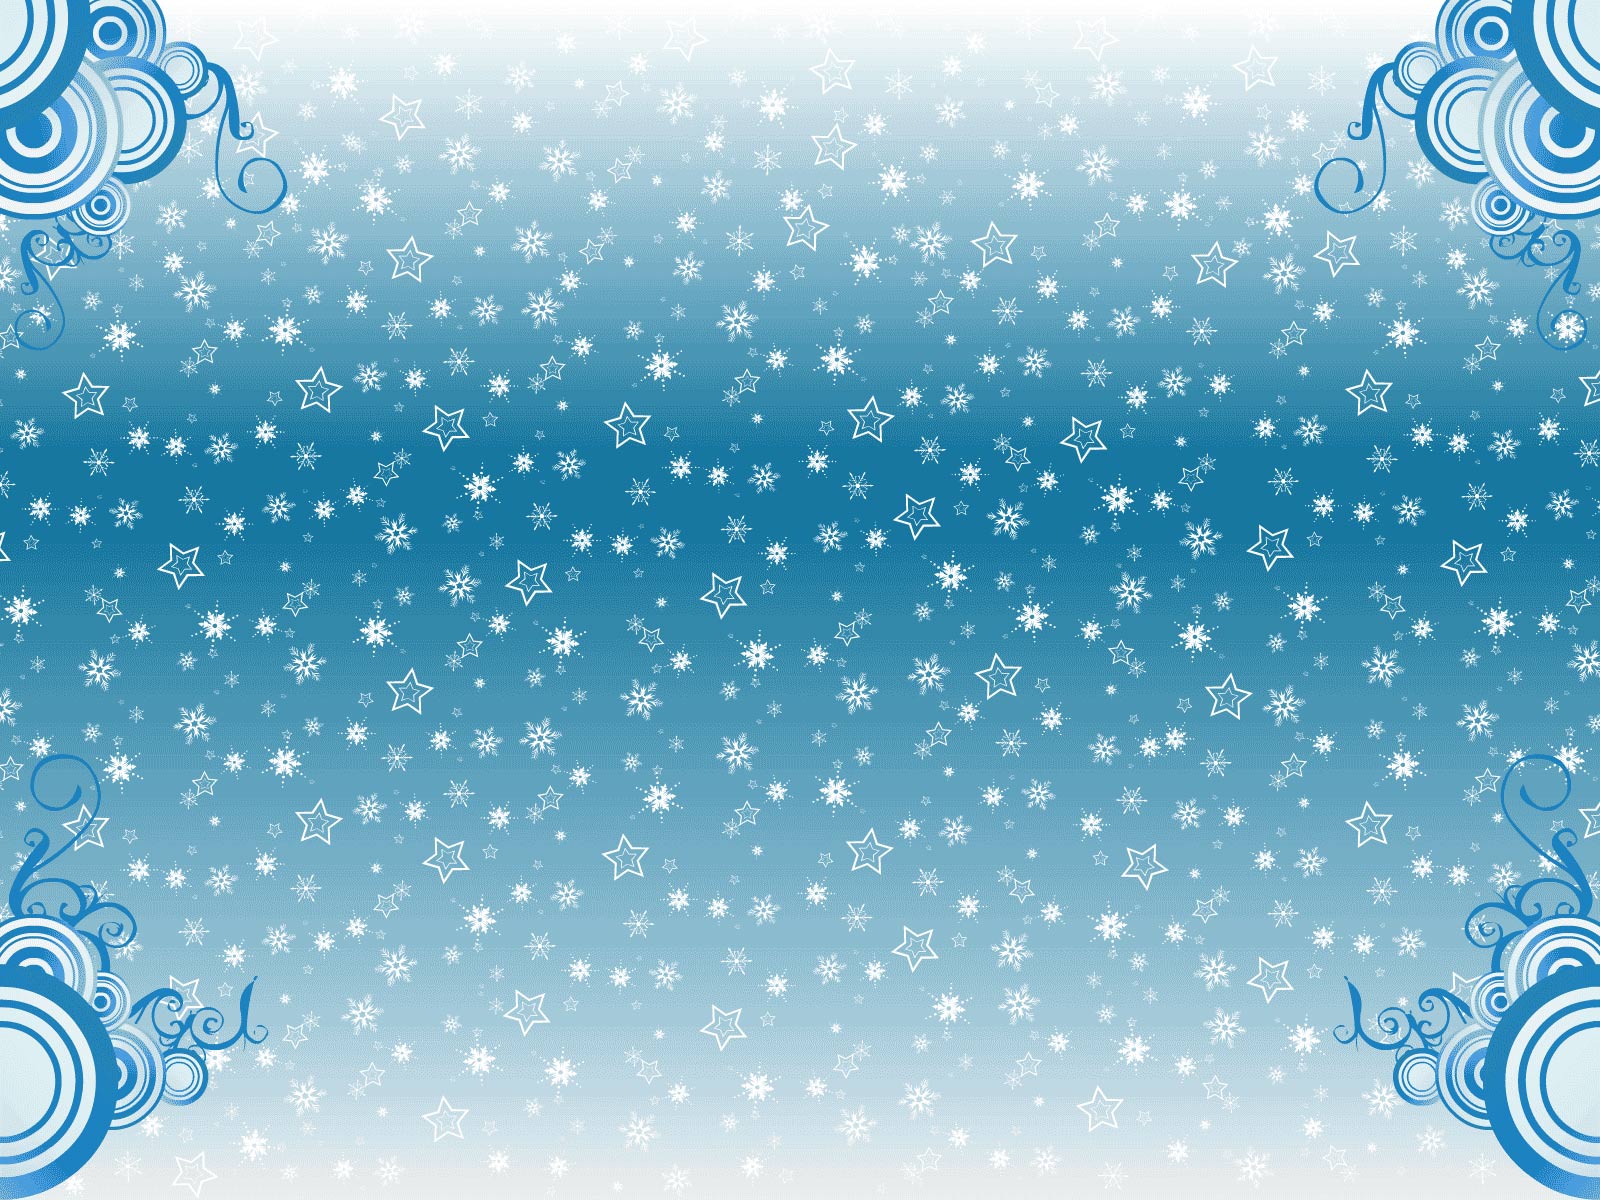 Get Background Winter Desktop Wallpaper And Make This